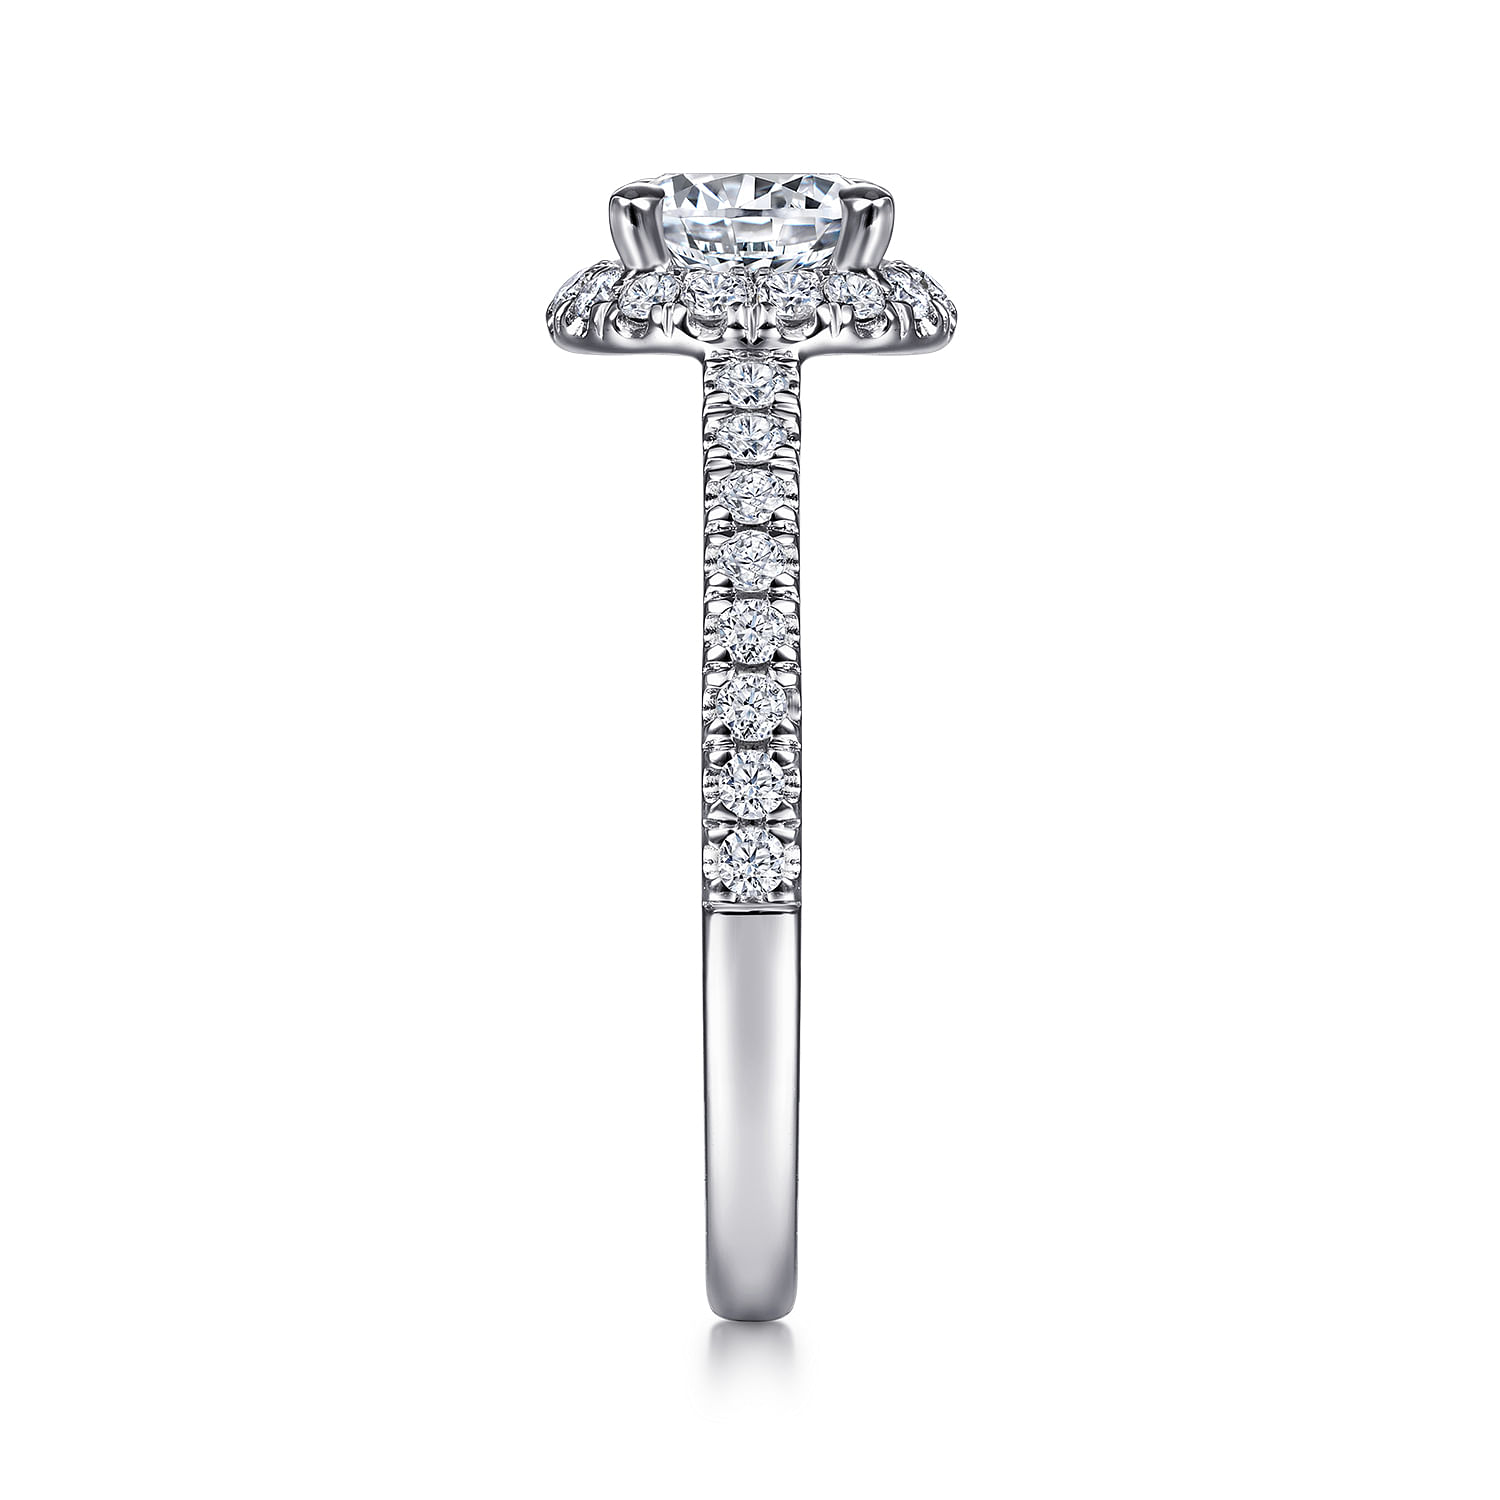 Vintage Inspired 14K White-Rose Gold Round Halo Diamond Engagement Ring